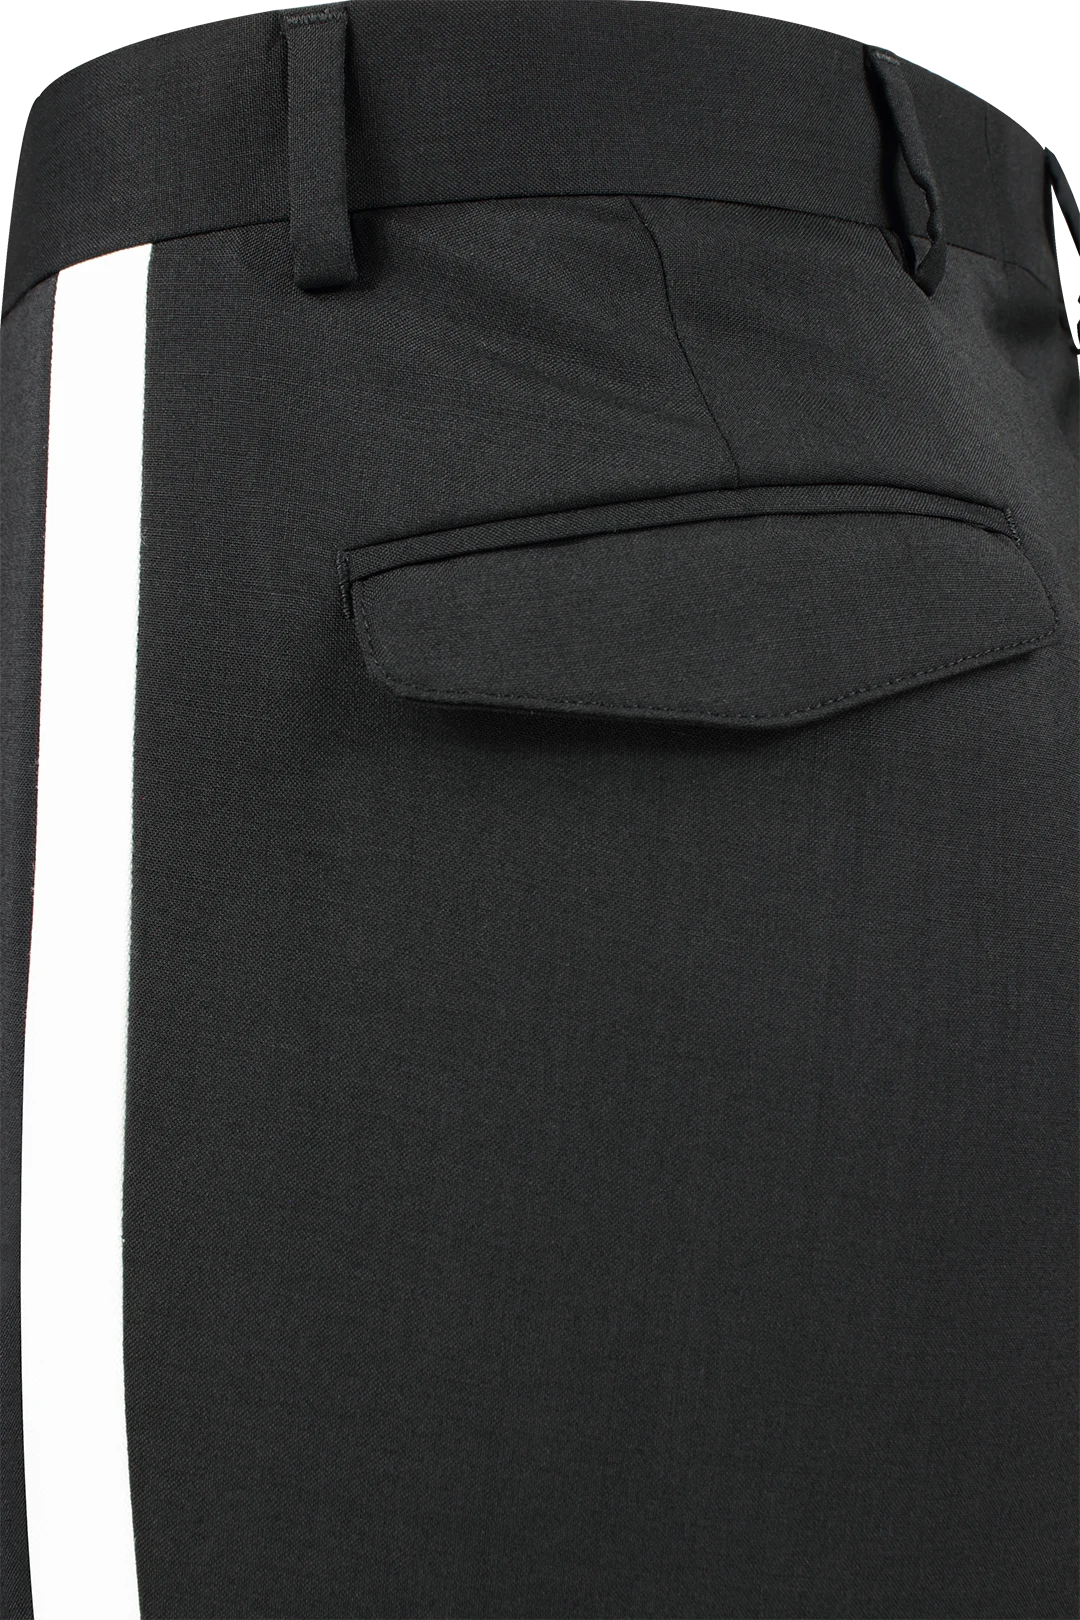 Pantalone in lana nera con banda laterale bianca taschino